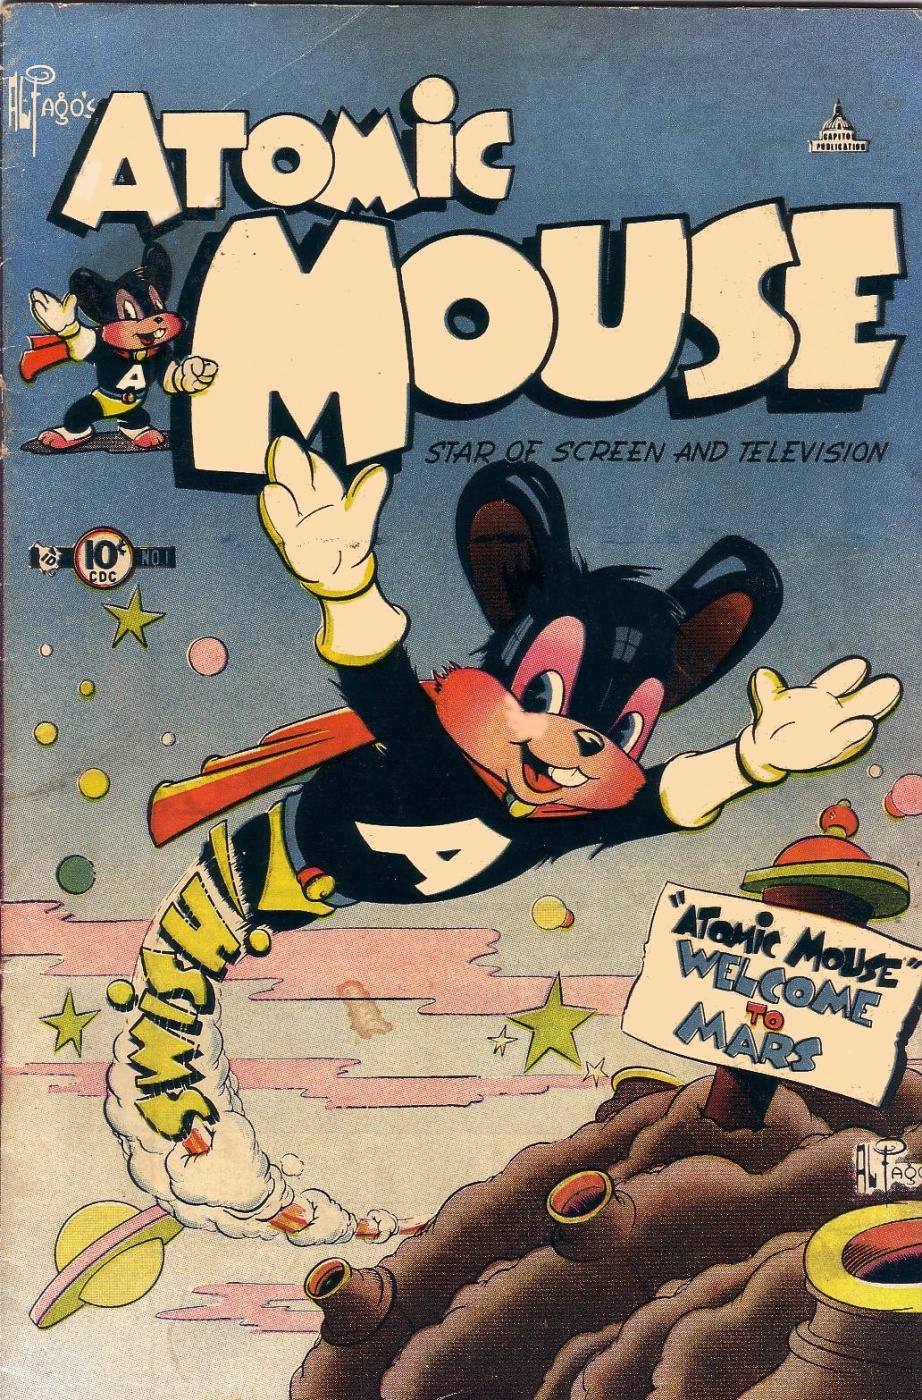 Atomic Mouse Comics - Funny Comics (1)